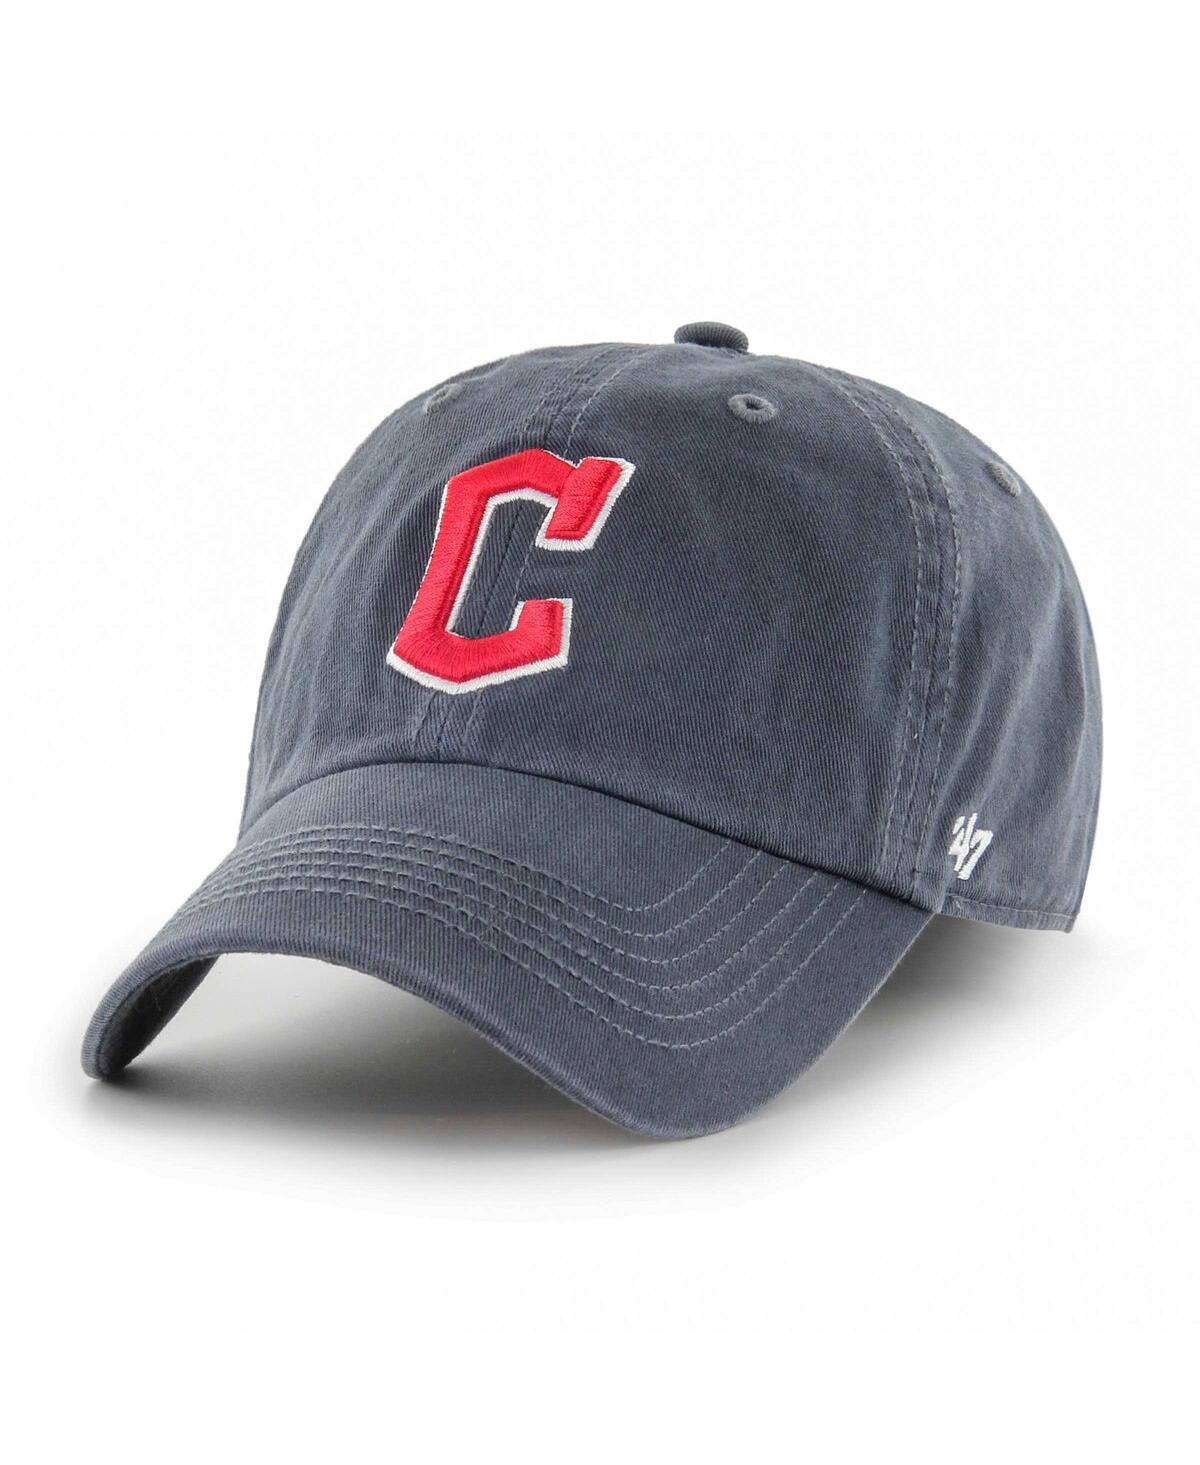 Men's '47 Brand Navy Cleveland Guardians Franchise Logo Fitted Hat - Navy